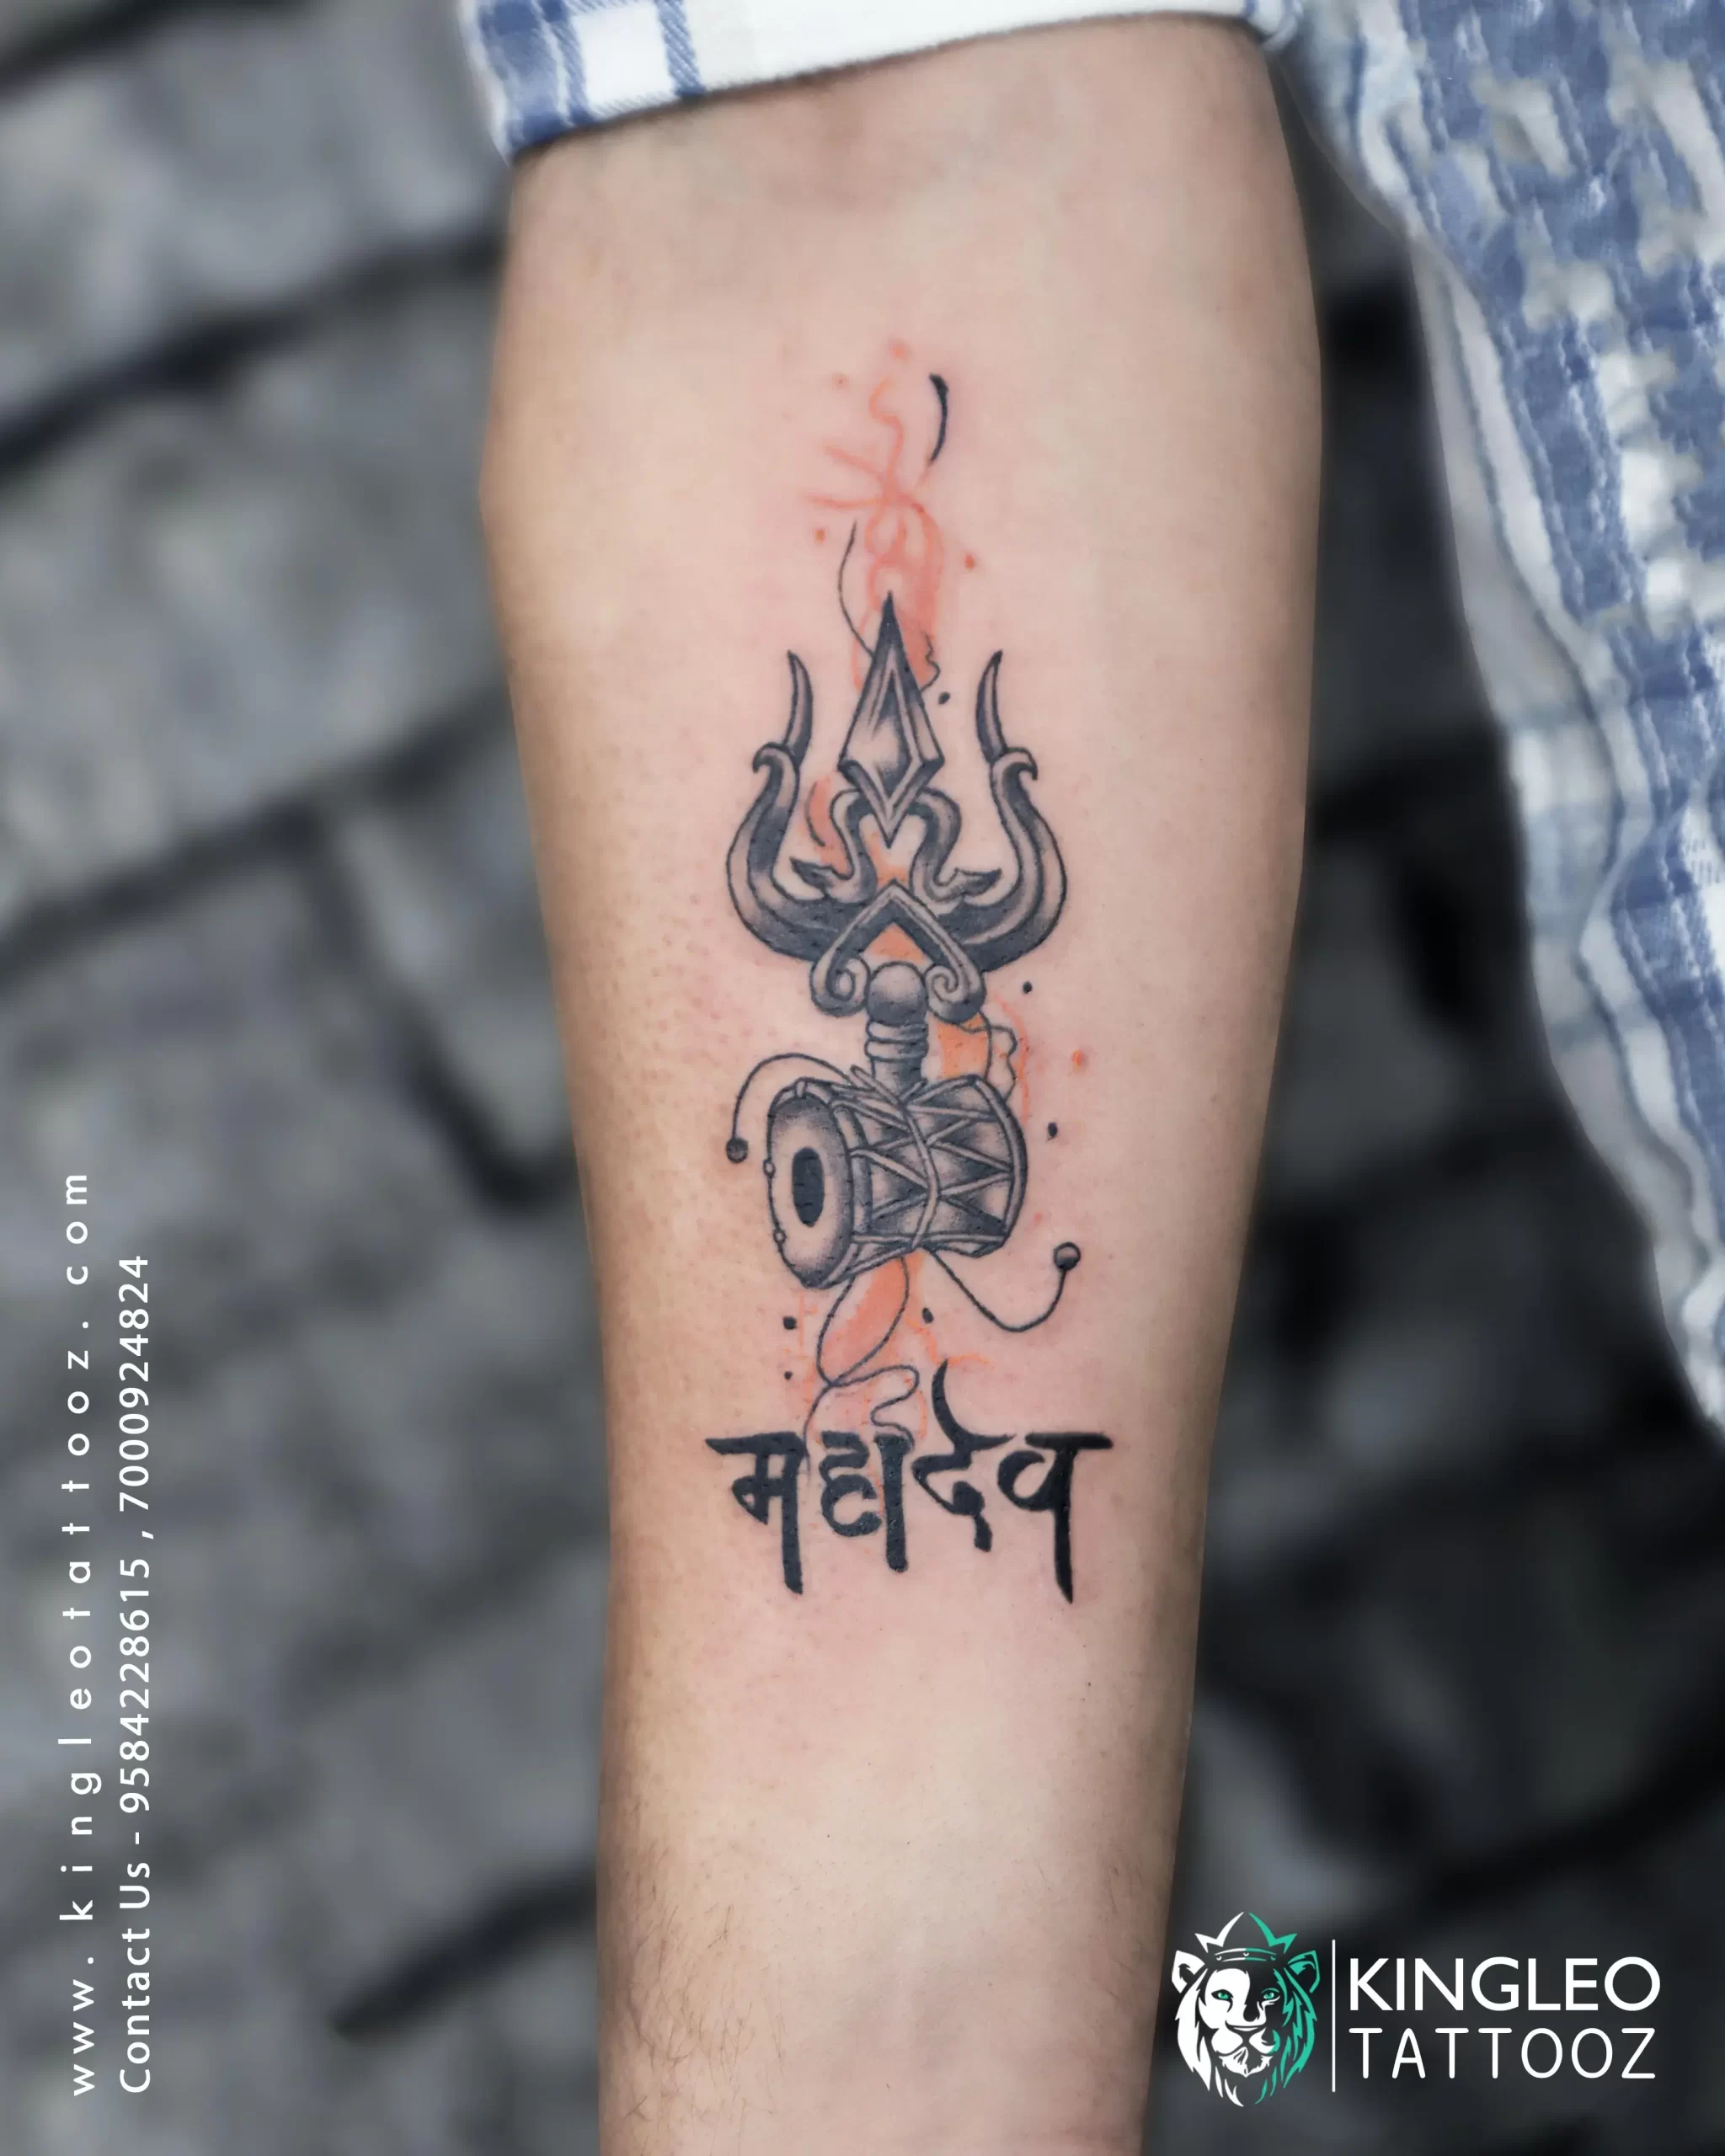 Tattoo Time lapse | Om Namah Shivay Tattoo with trishul and damru |  Customized Tattoo - YouTube